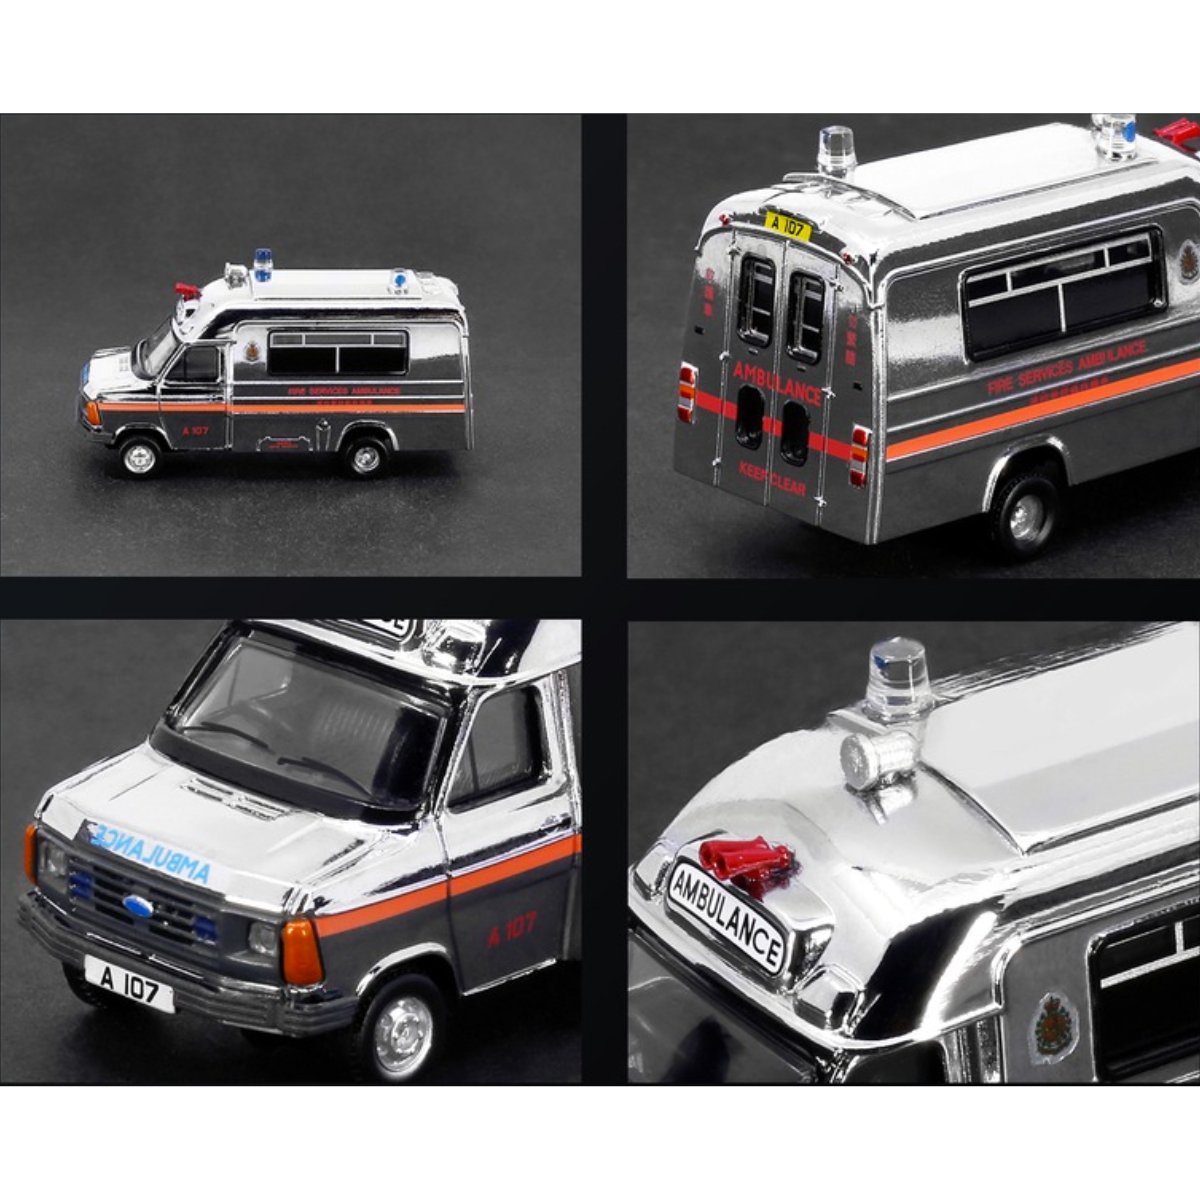 Tiny Models Ford Transit MK2 Ambulance “Chrome” A107 (1:76 Scale) - Phillips Hobbies